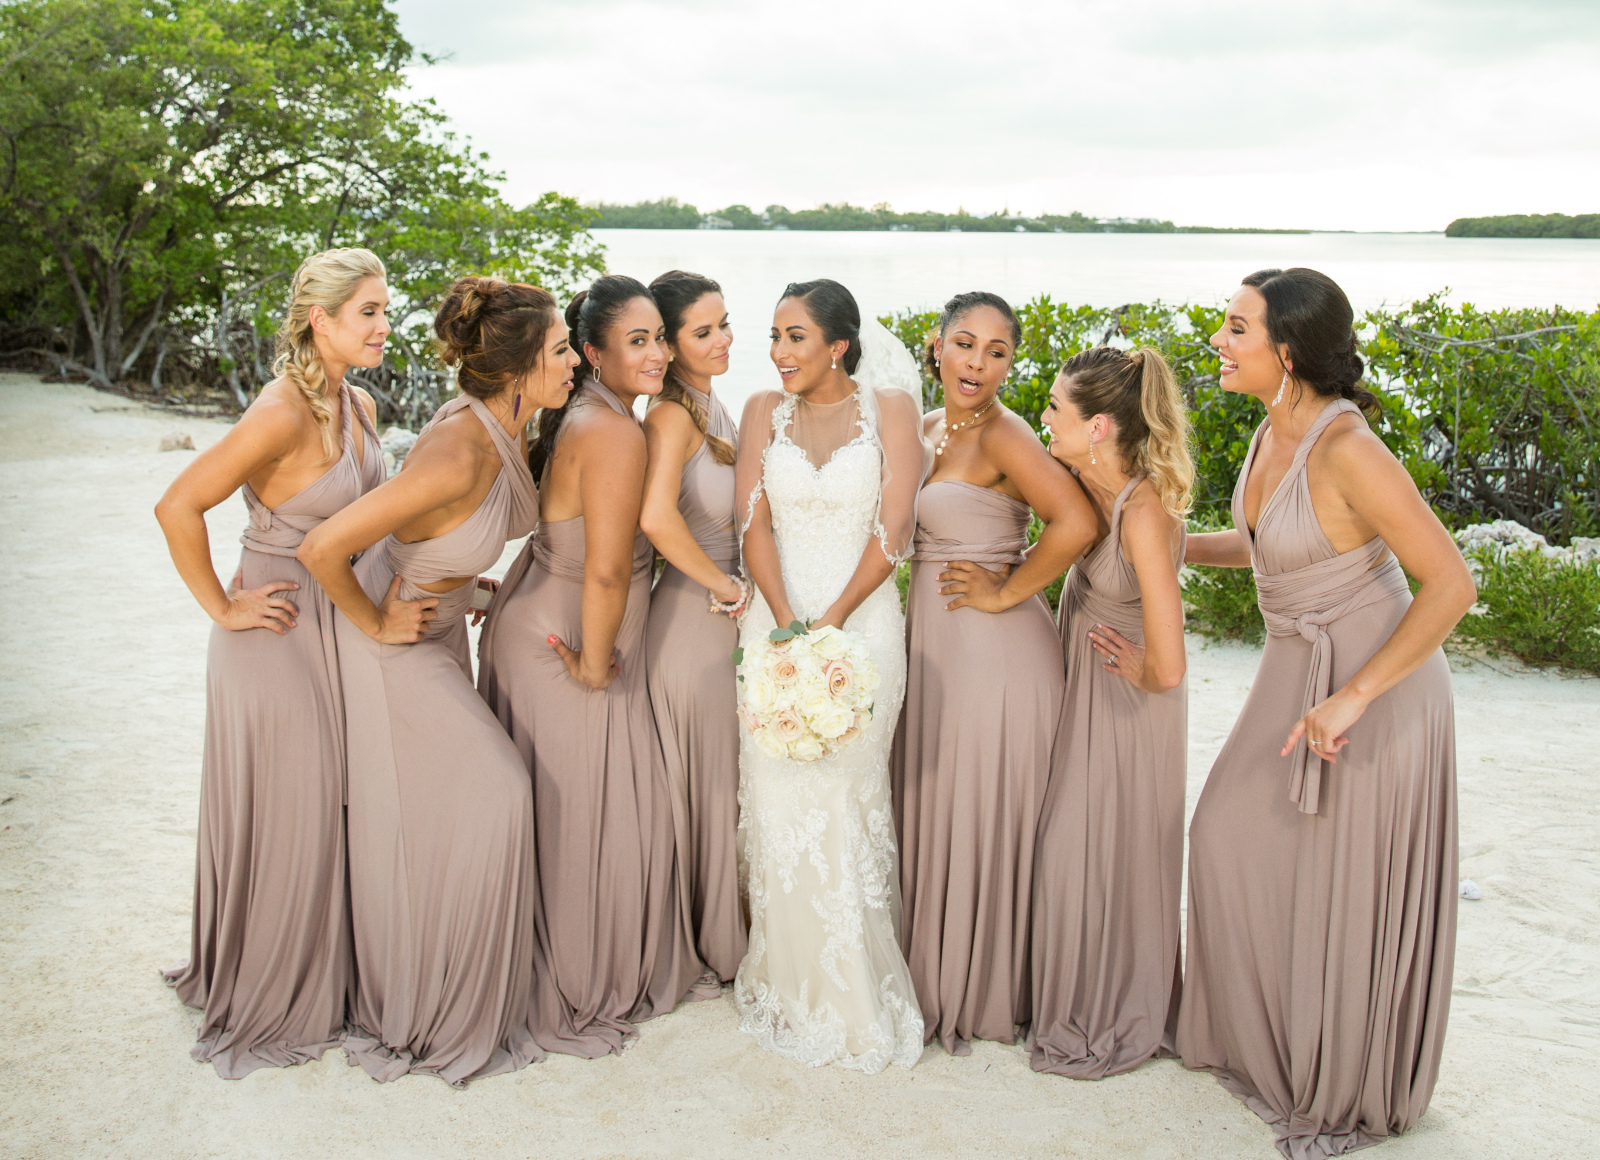 Beach Bridesmaid Dresses from Real Weddings - Destination Wedding Details